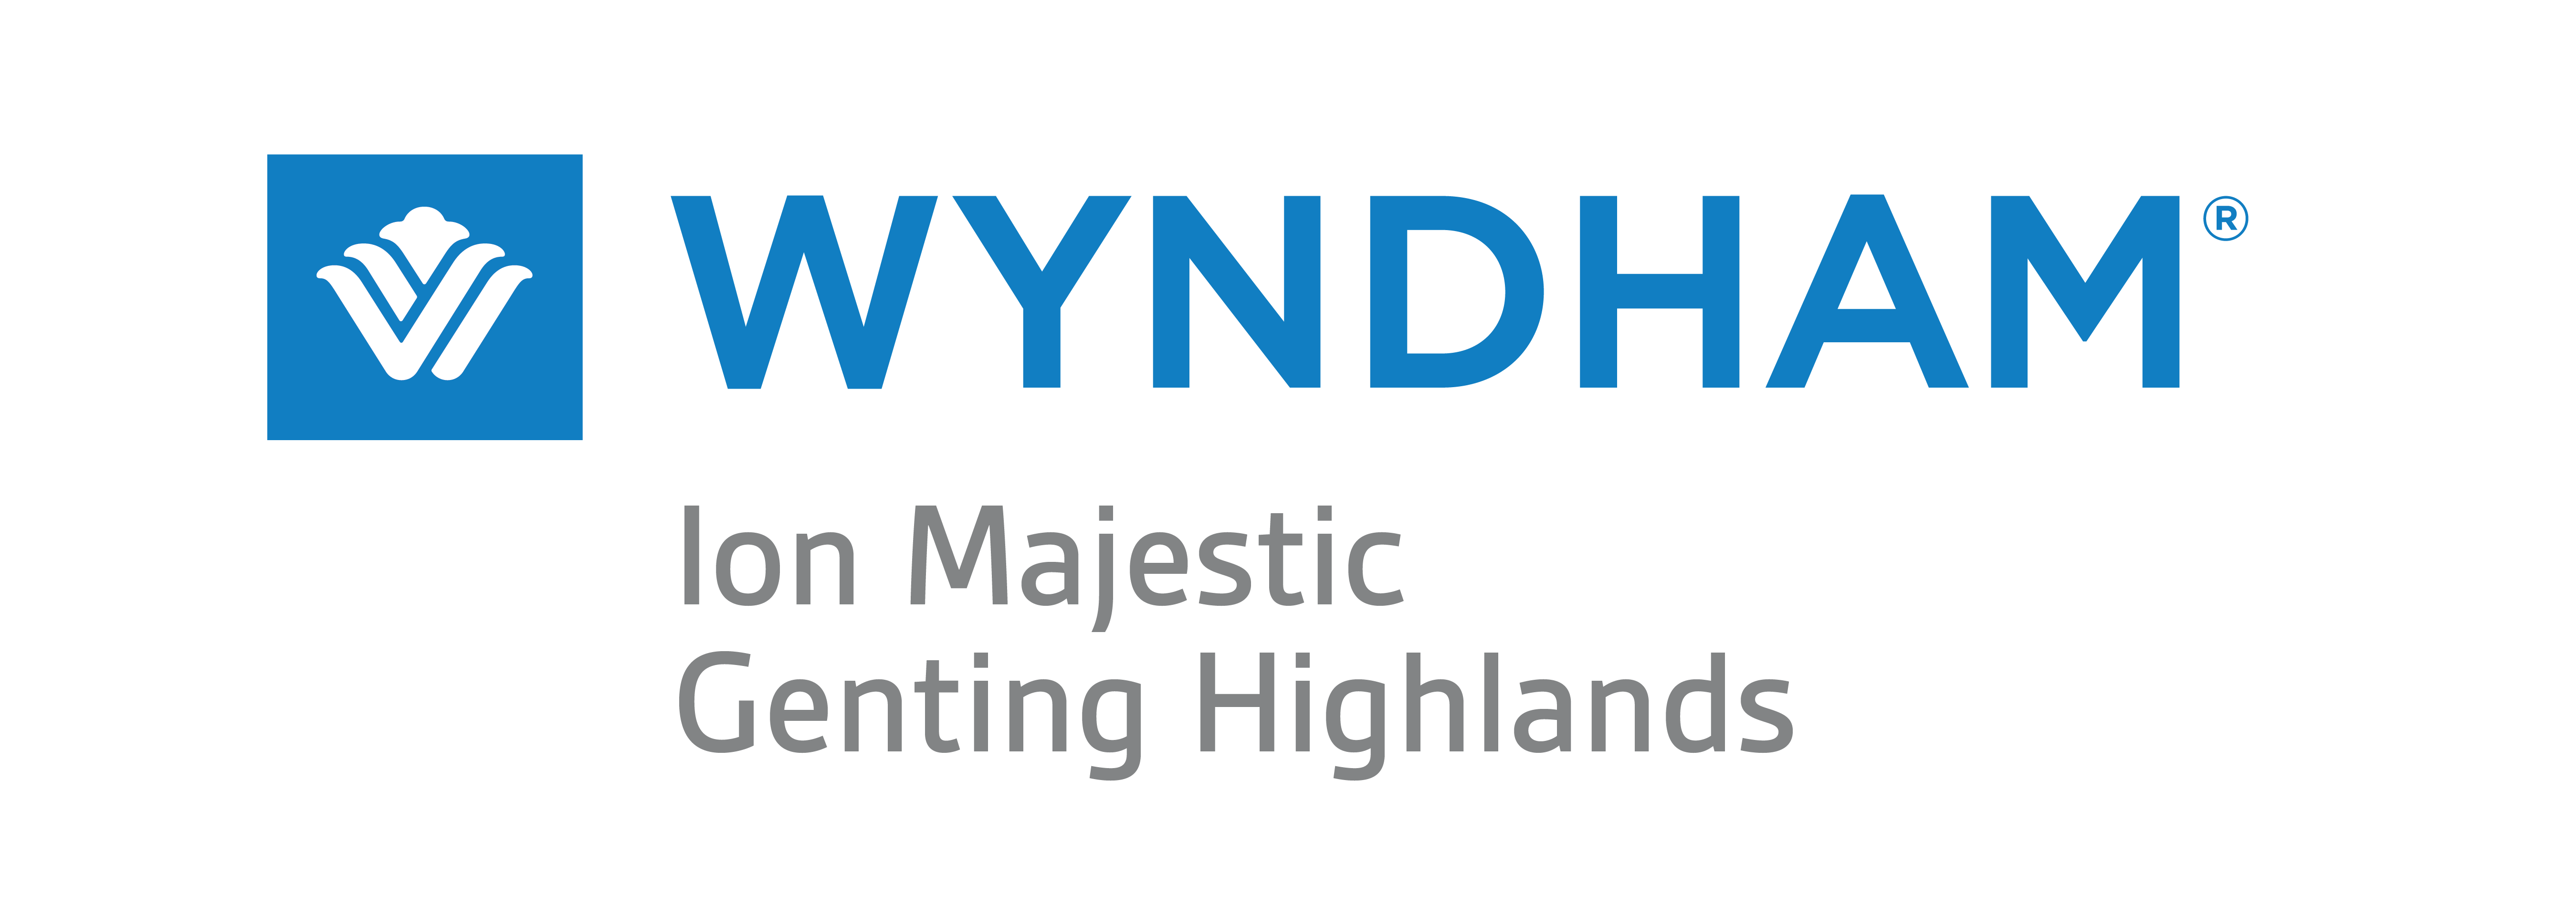 Wyndham Ion Majestic Logo